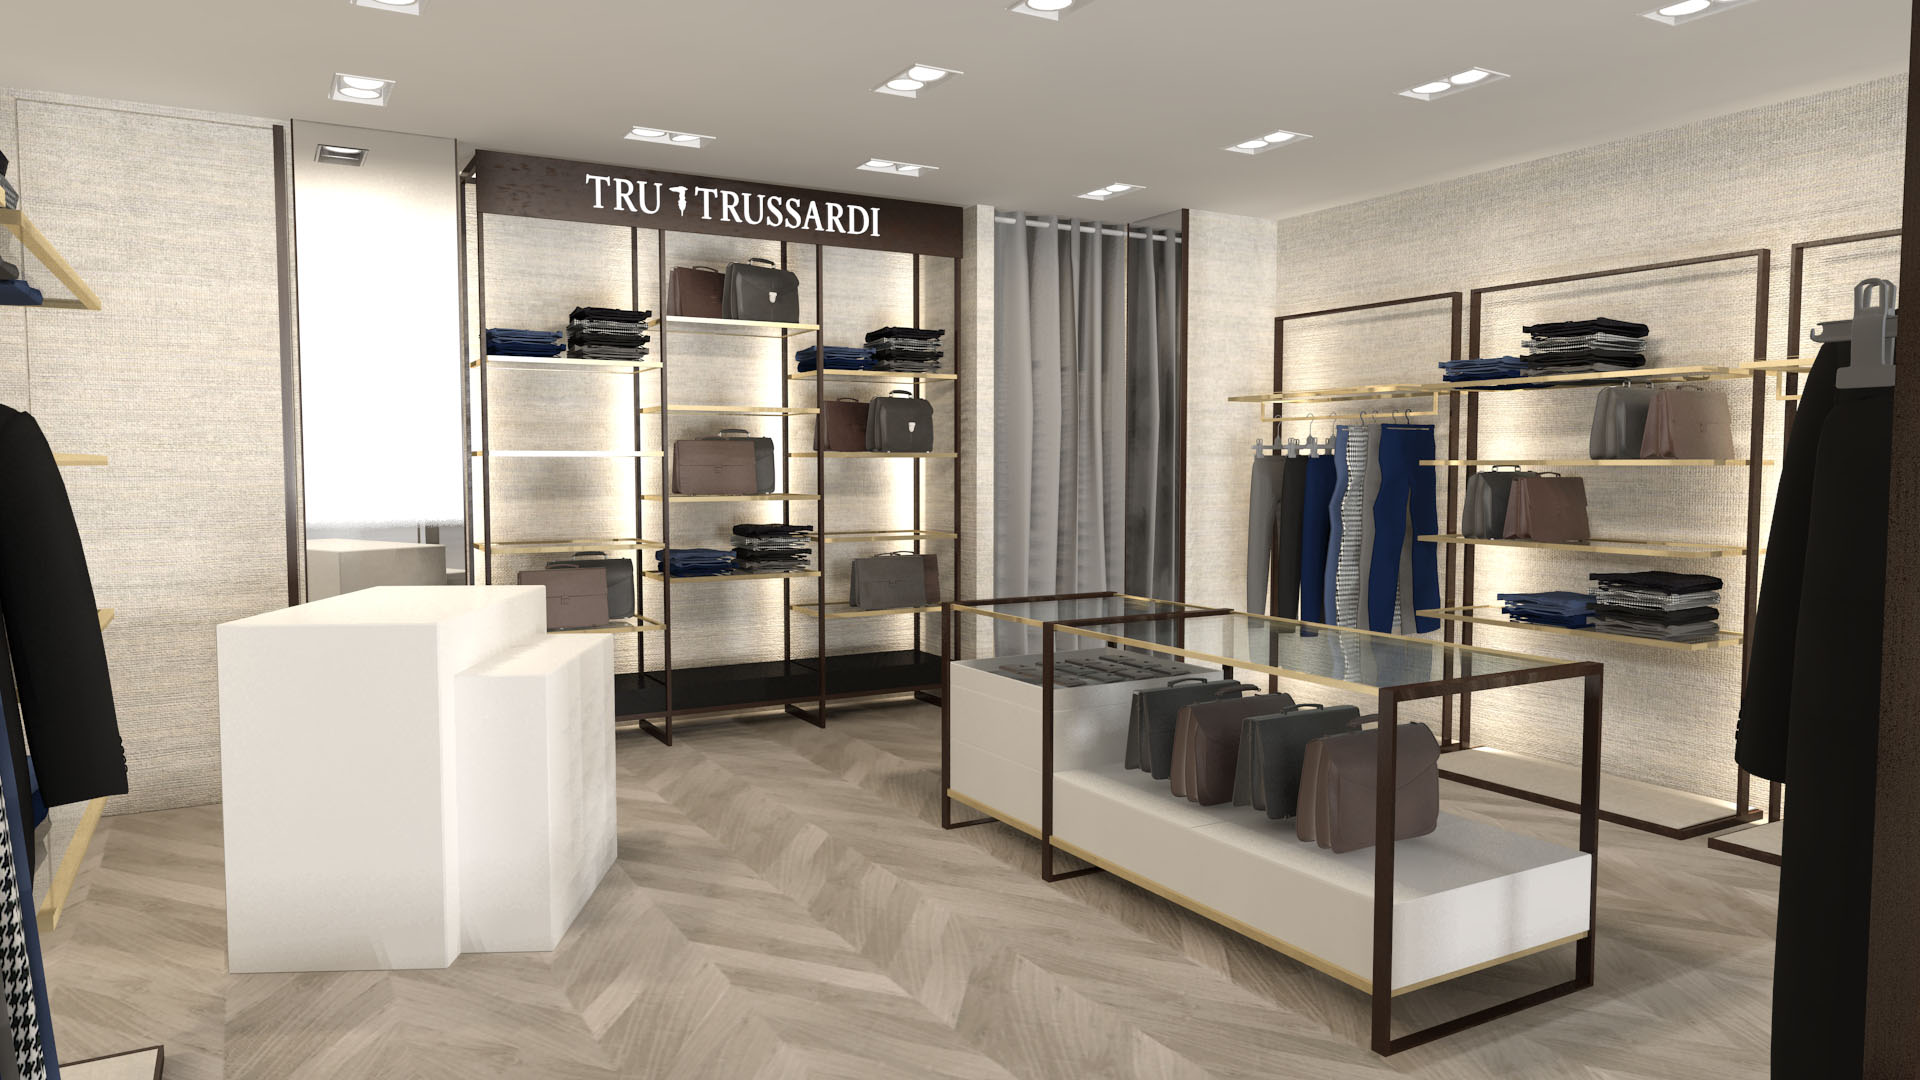 Tru Trussardi Galeries Lafayette Haussmann Parigi: il nuovo corner shop maschile